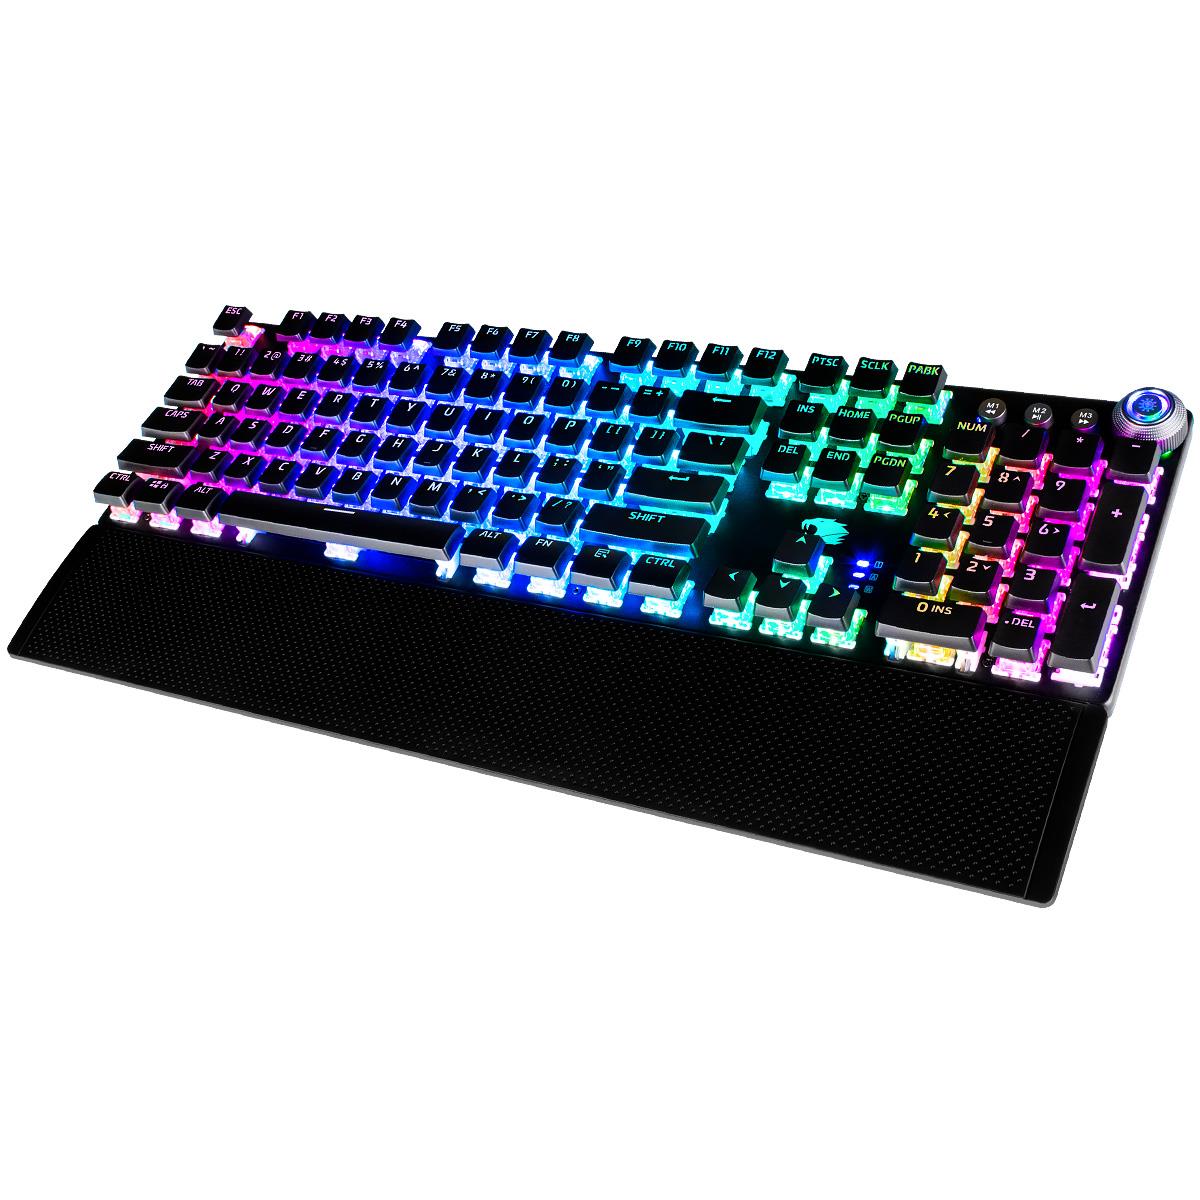 Image of iBUYPOWER MEK 3 LT RGB Mechanical Gaming Keyboard